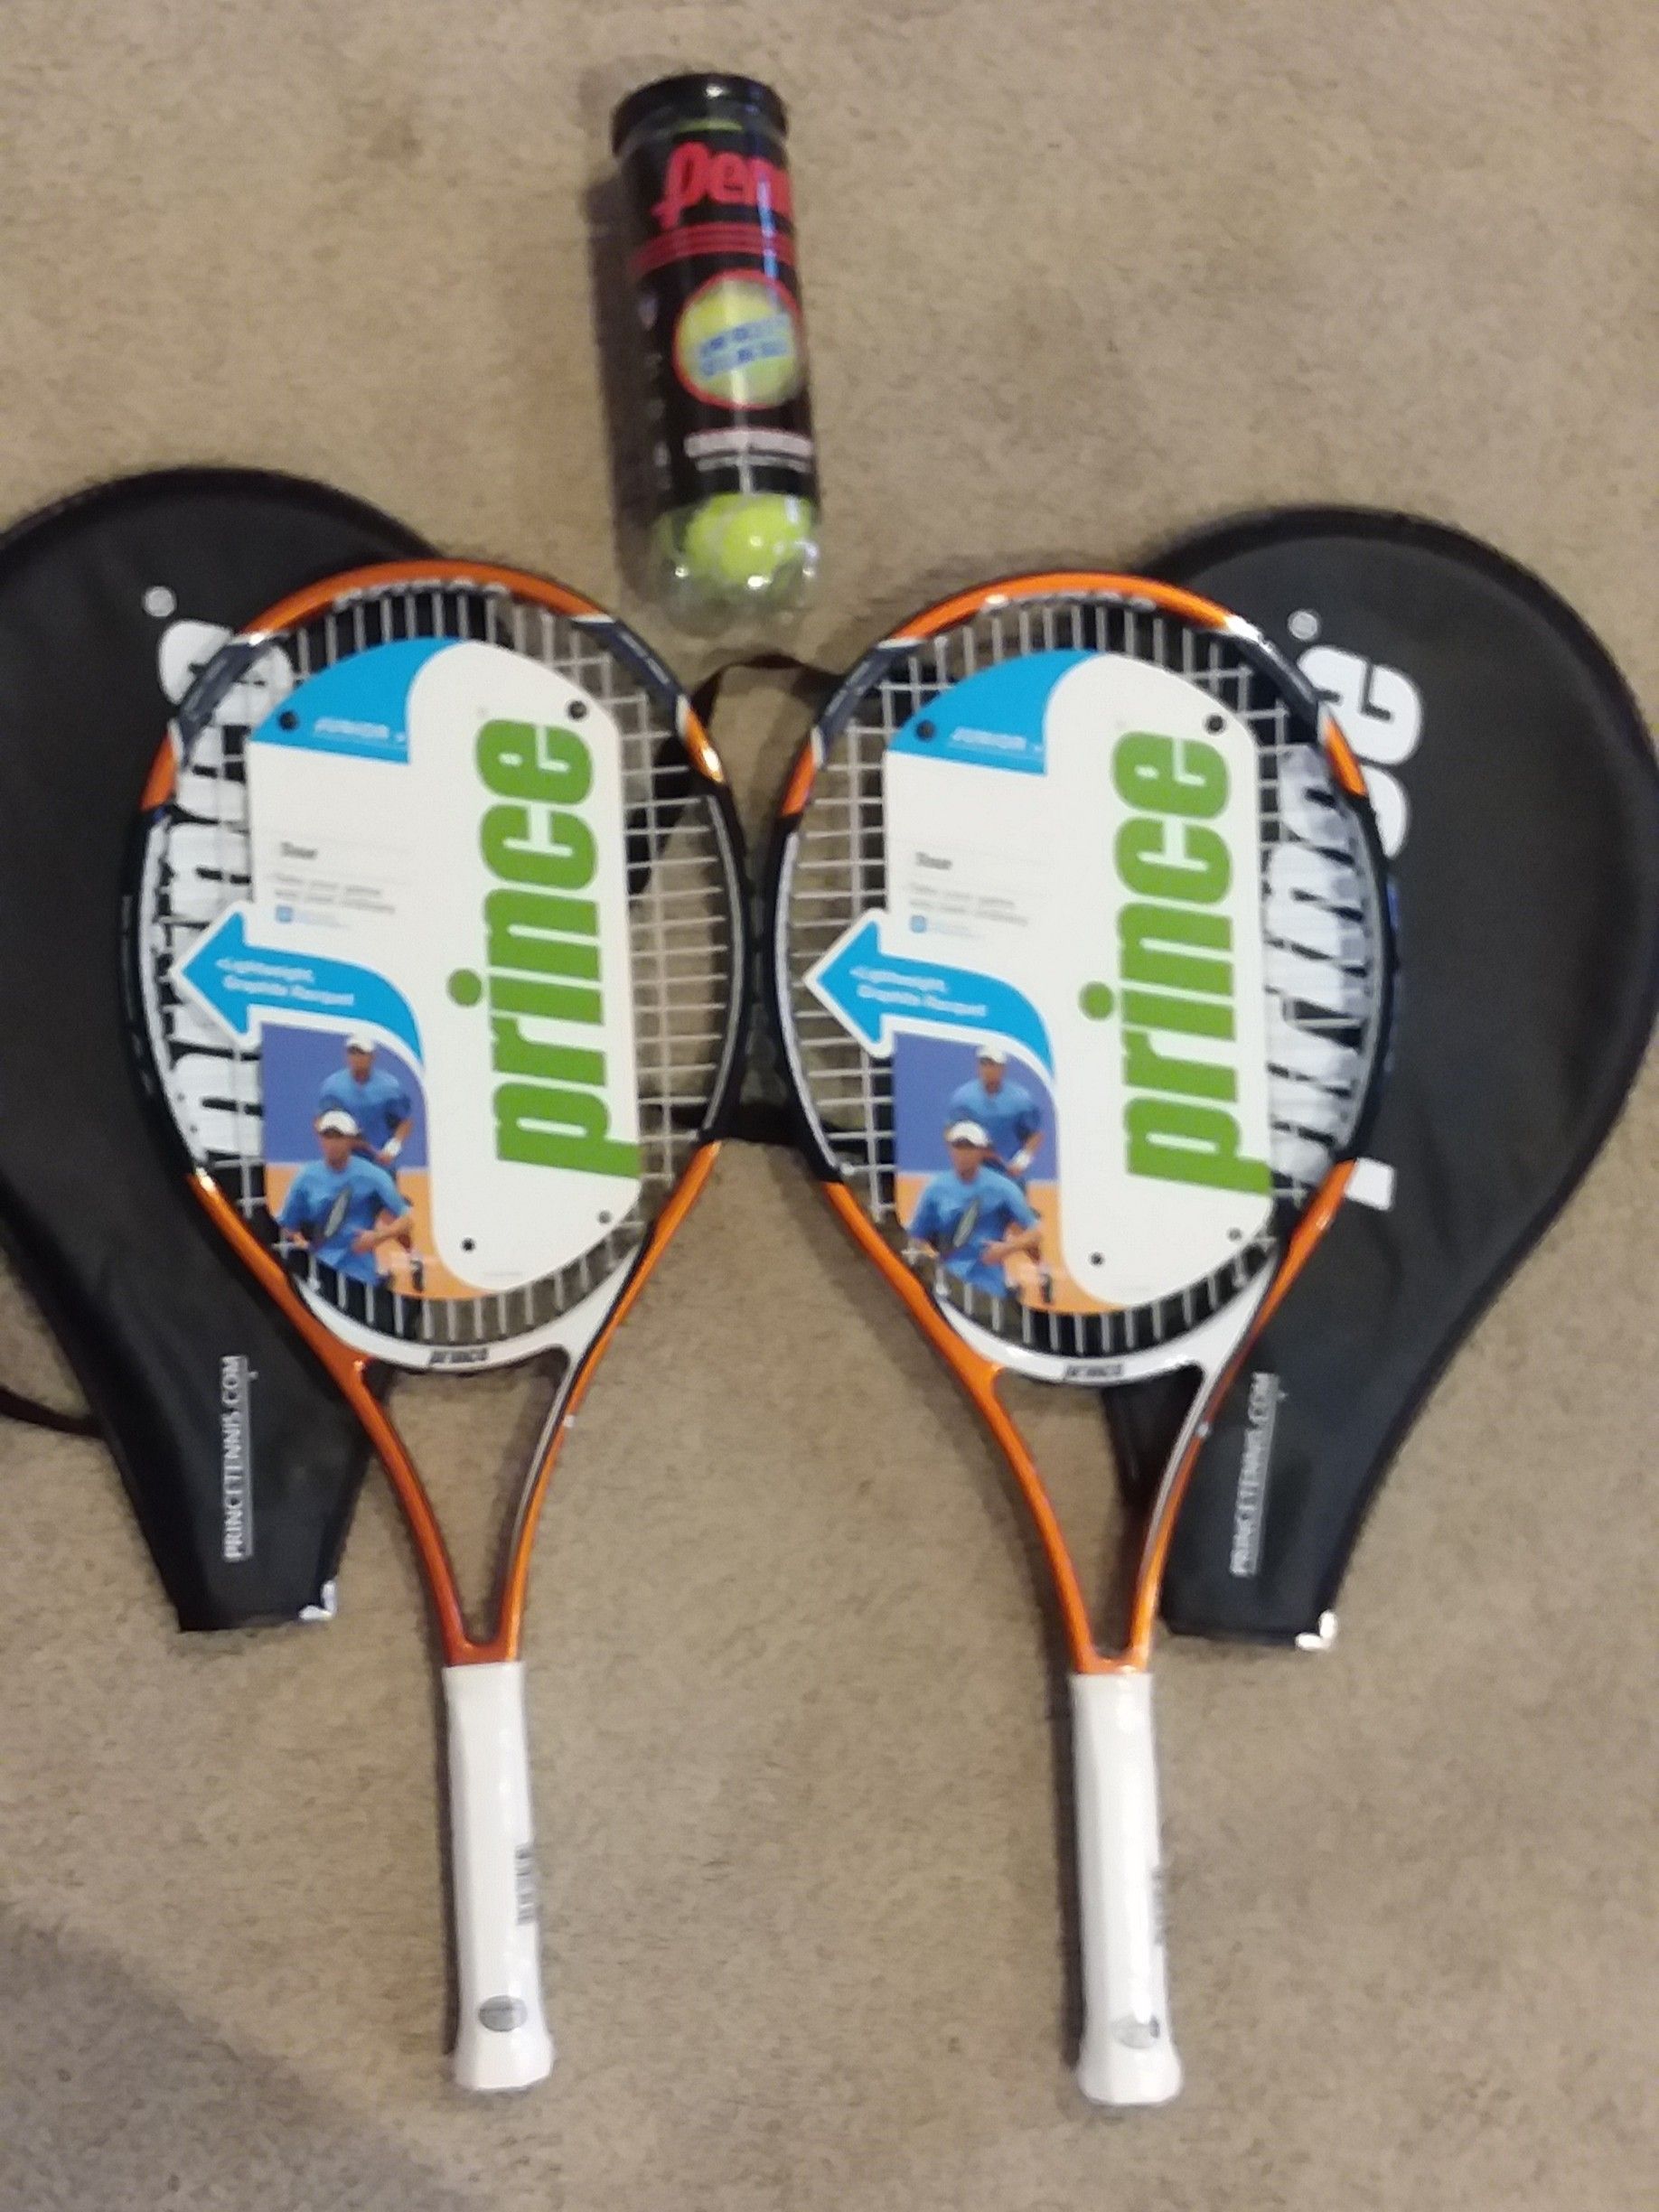 2 Prince Jr tennis rackets